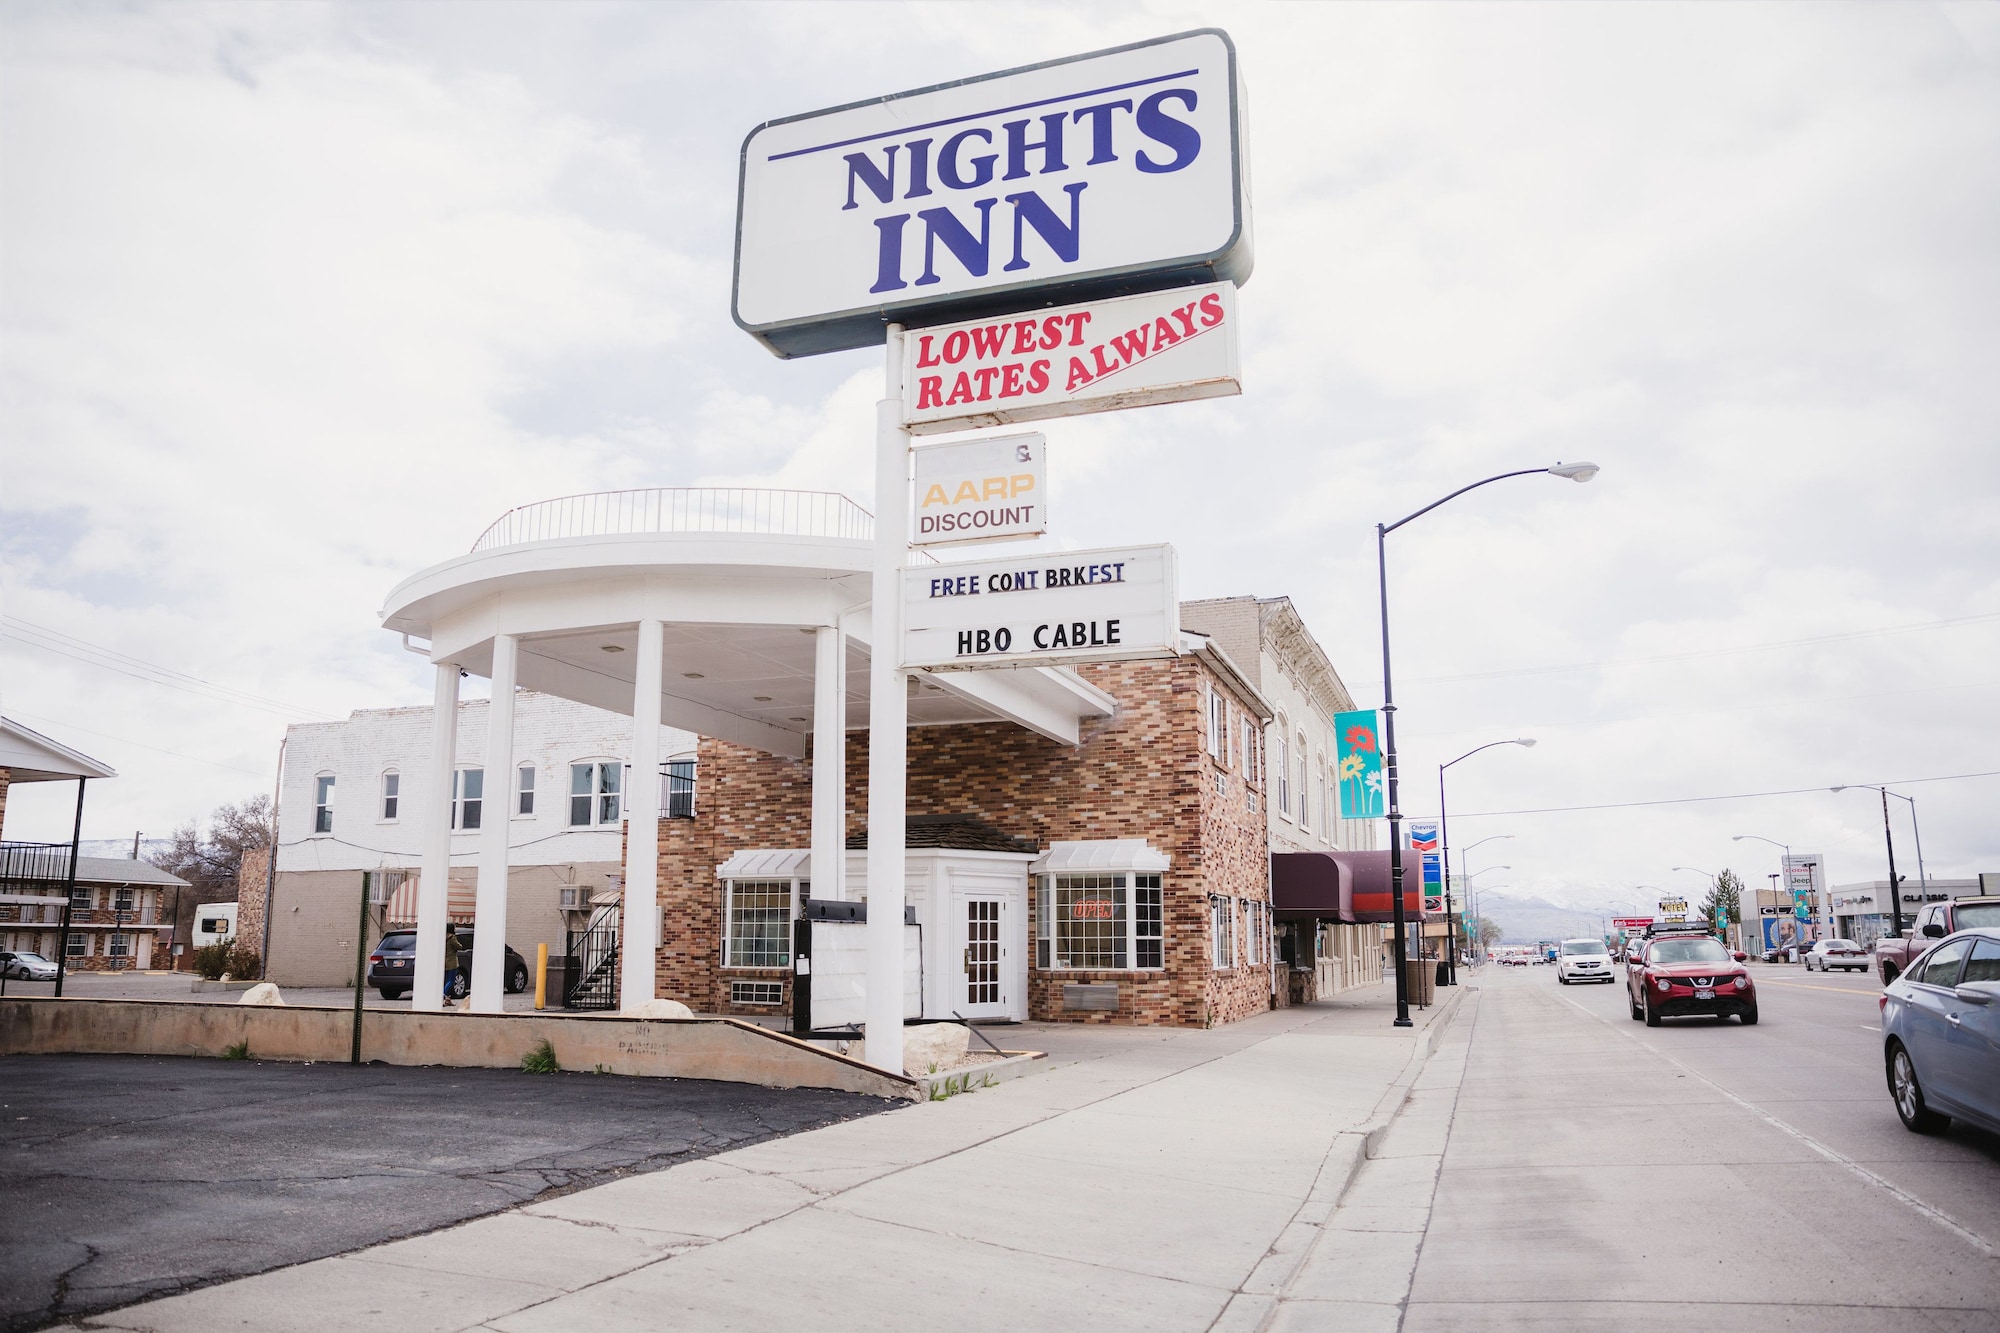 Nights Inn